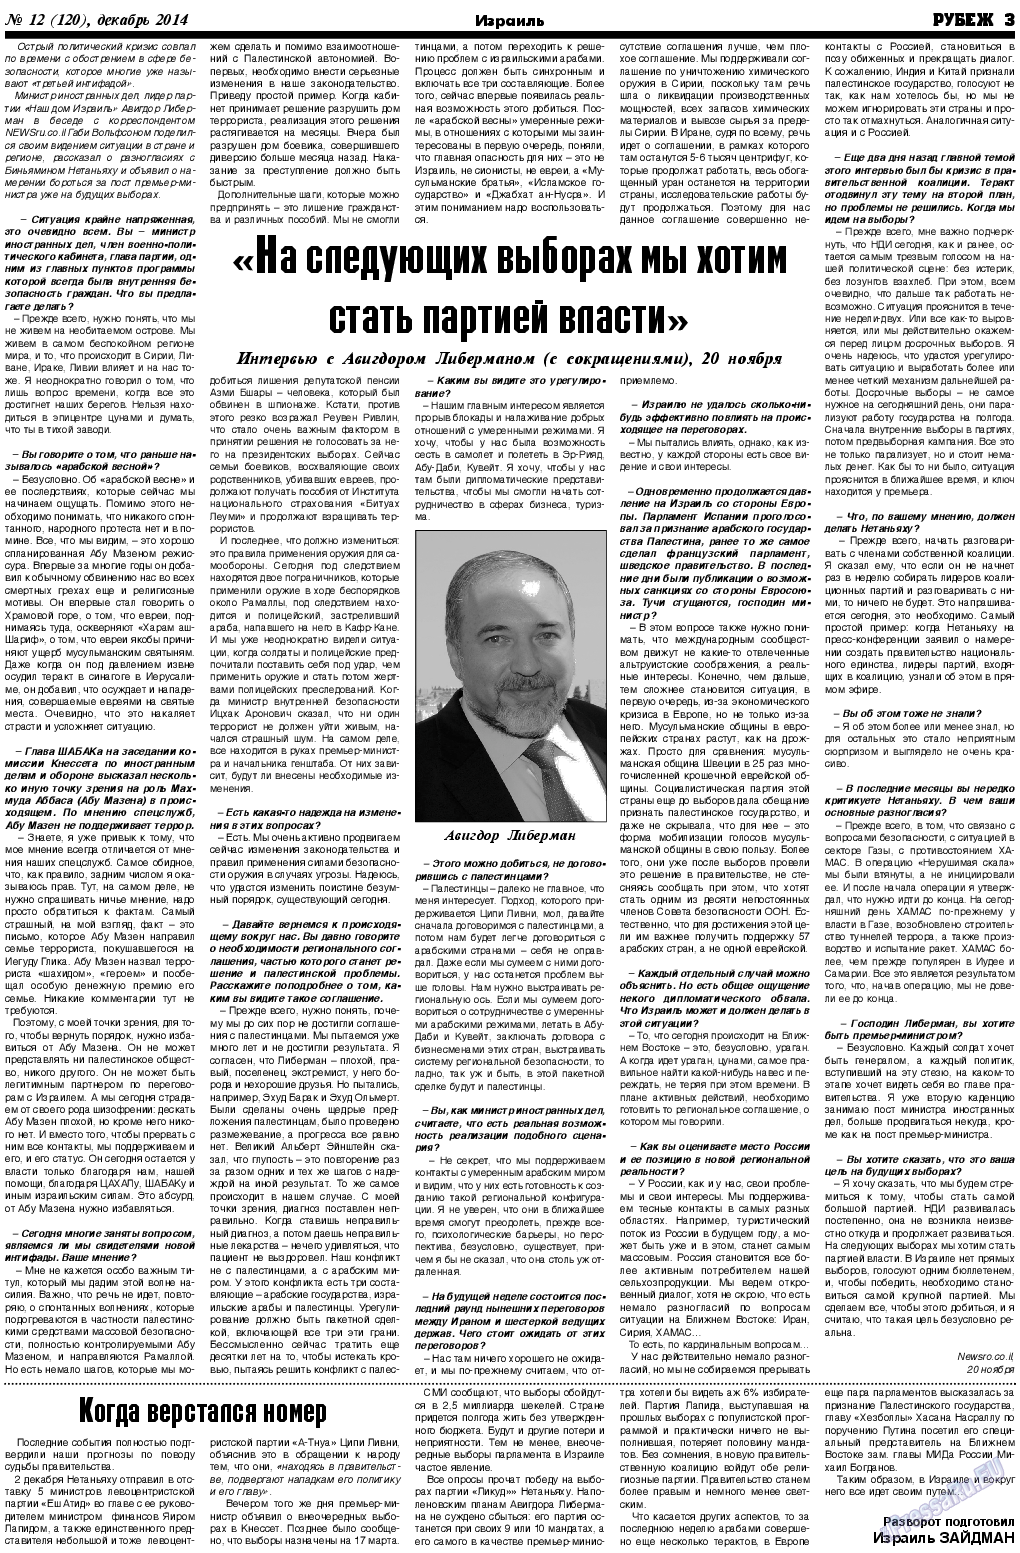 Рубеж, газета. 2014 №12 стр.3